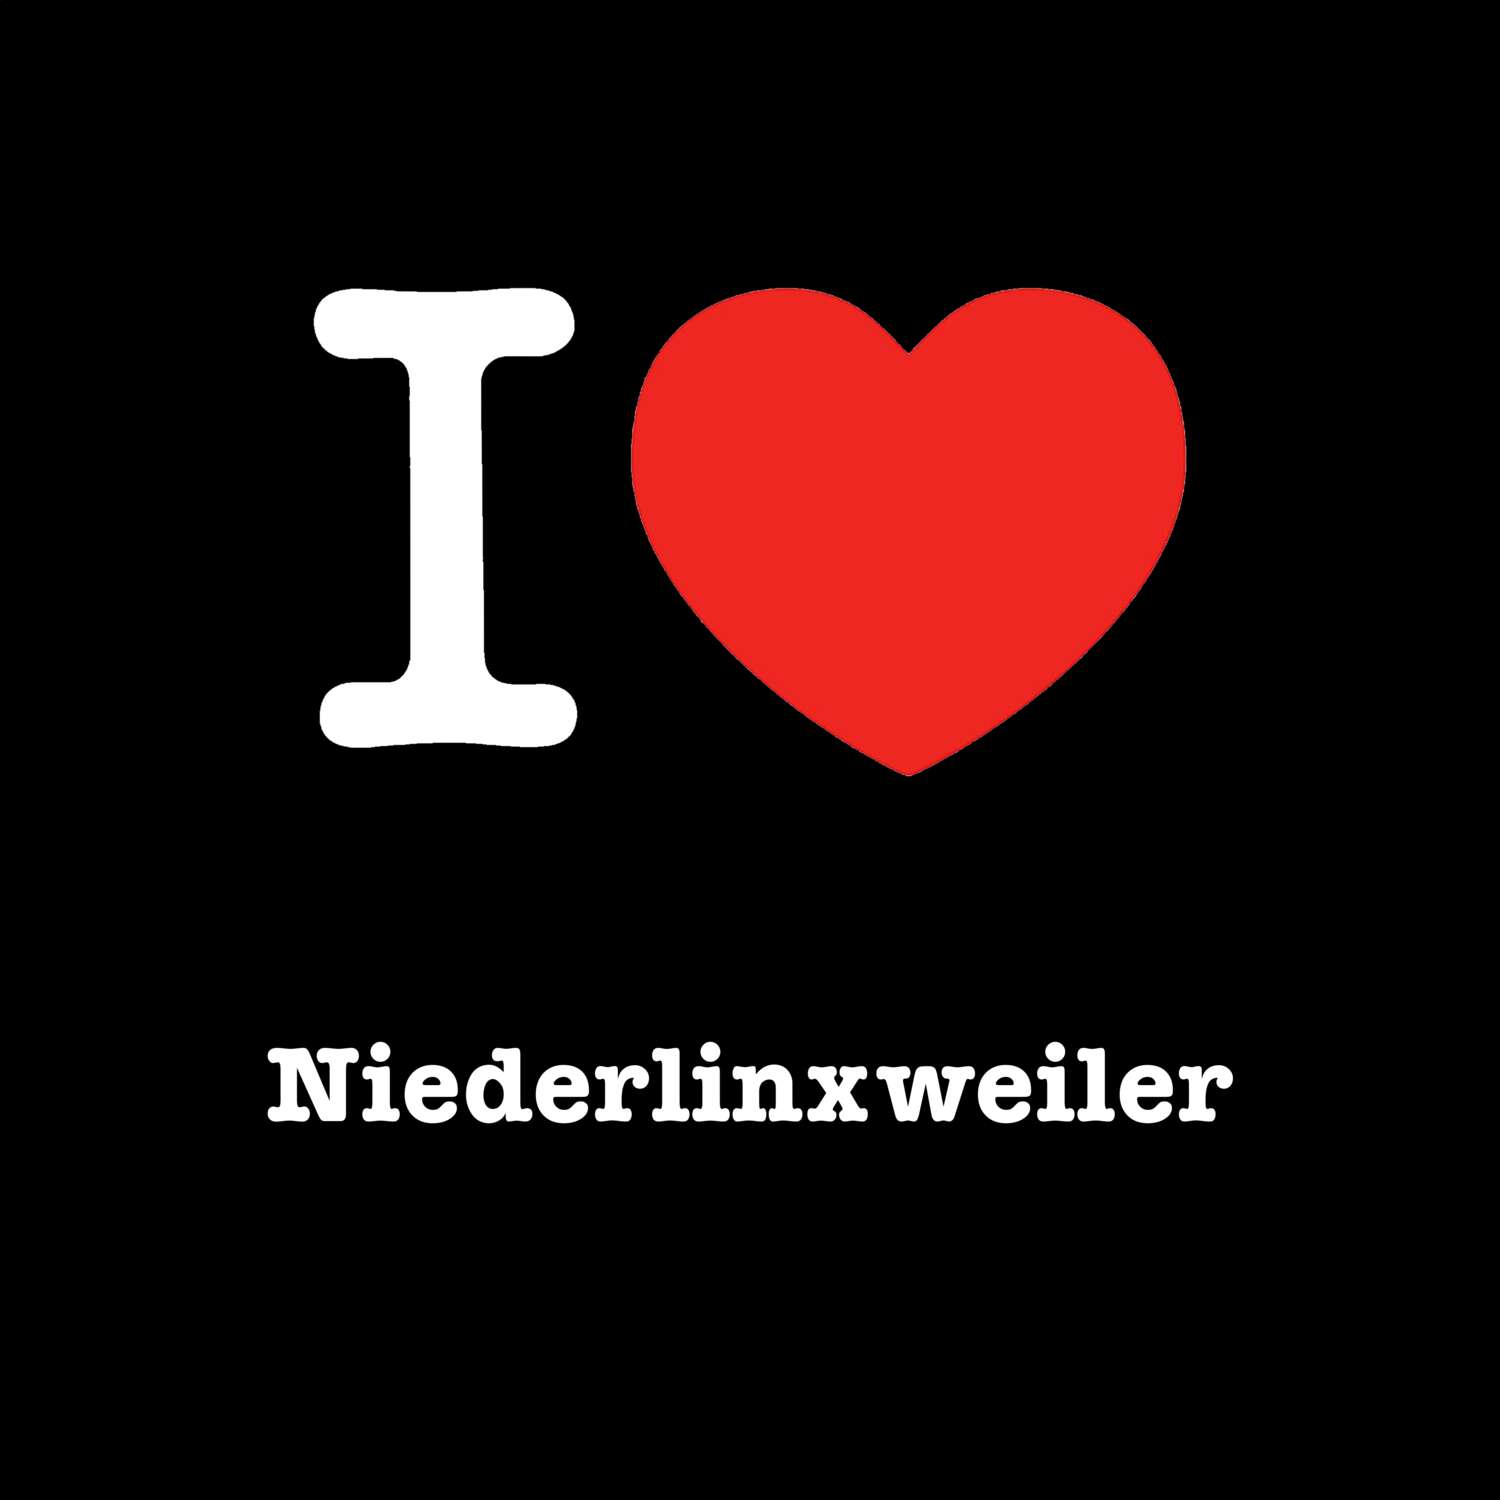 Niederlinxweiler T-Shirt »I love«